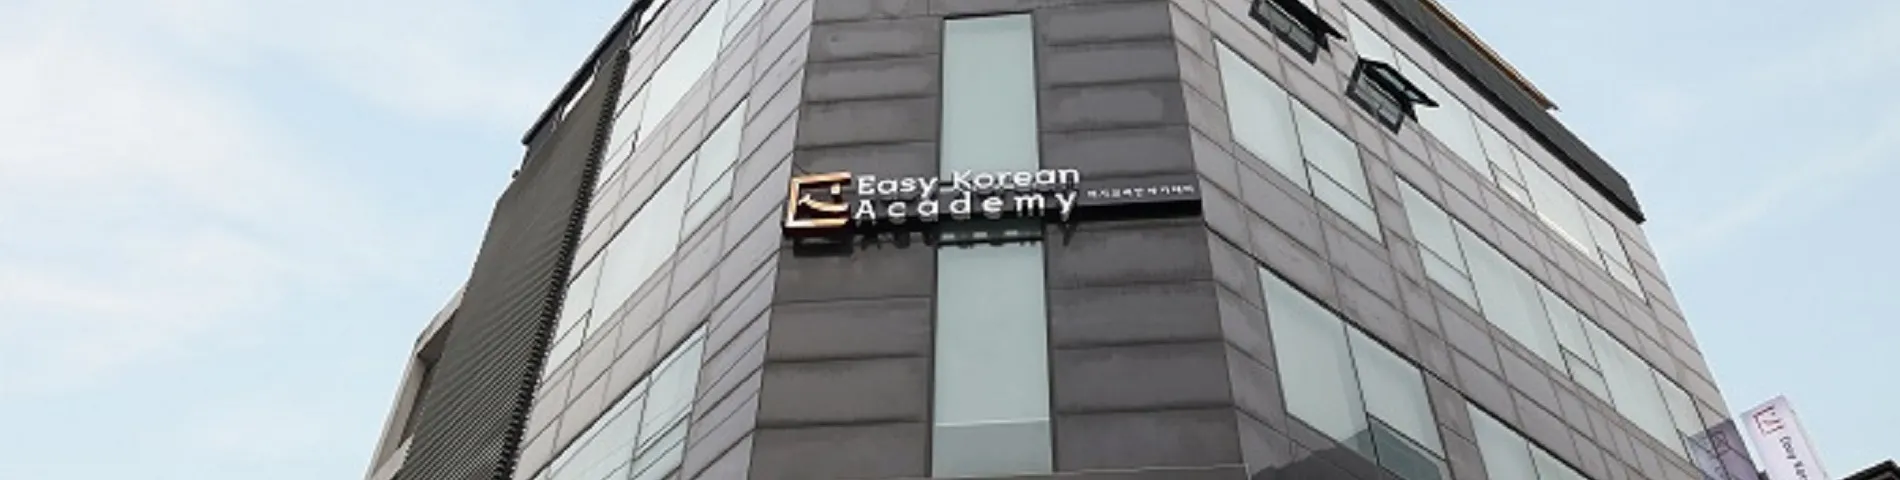 Easy Korean Academy immagine 1